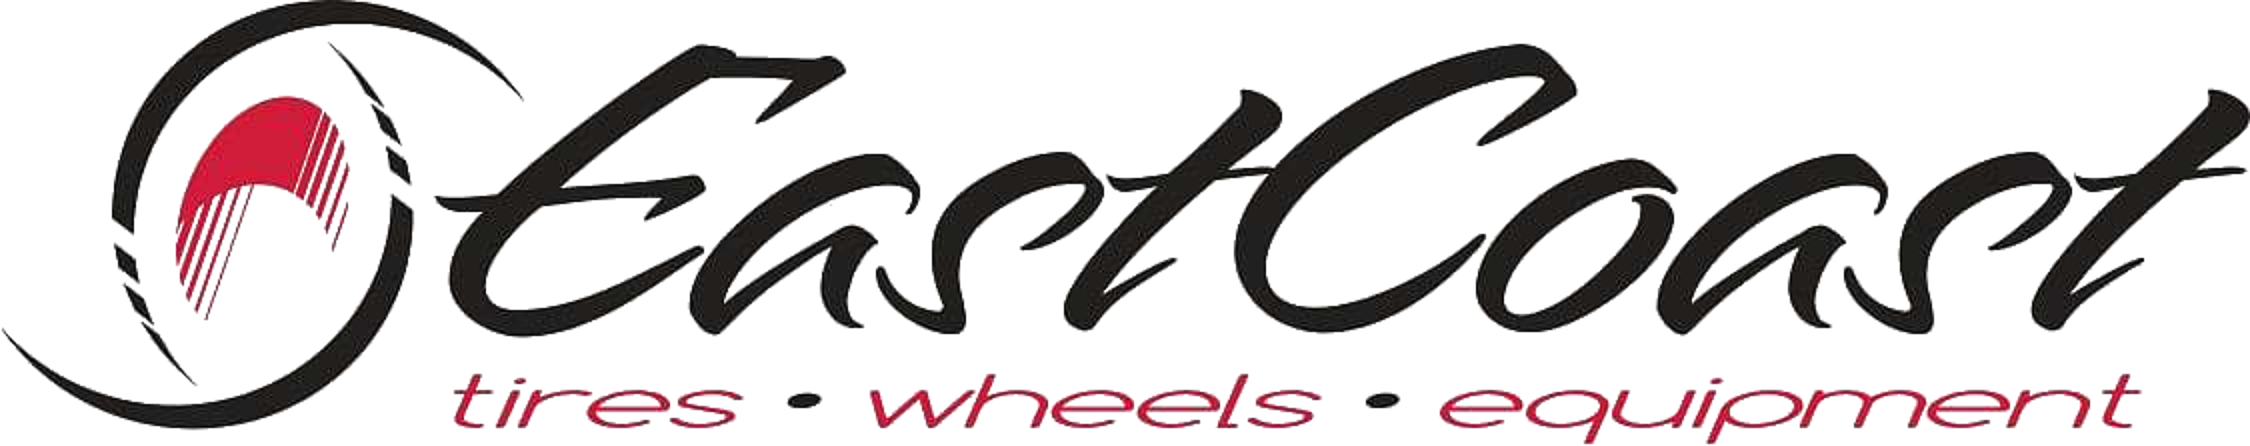 East Coast Tires, Wheels, & Equipment